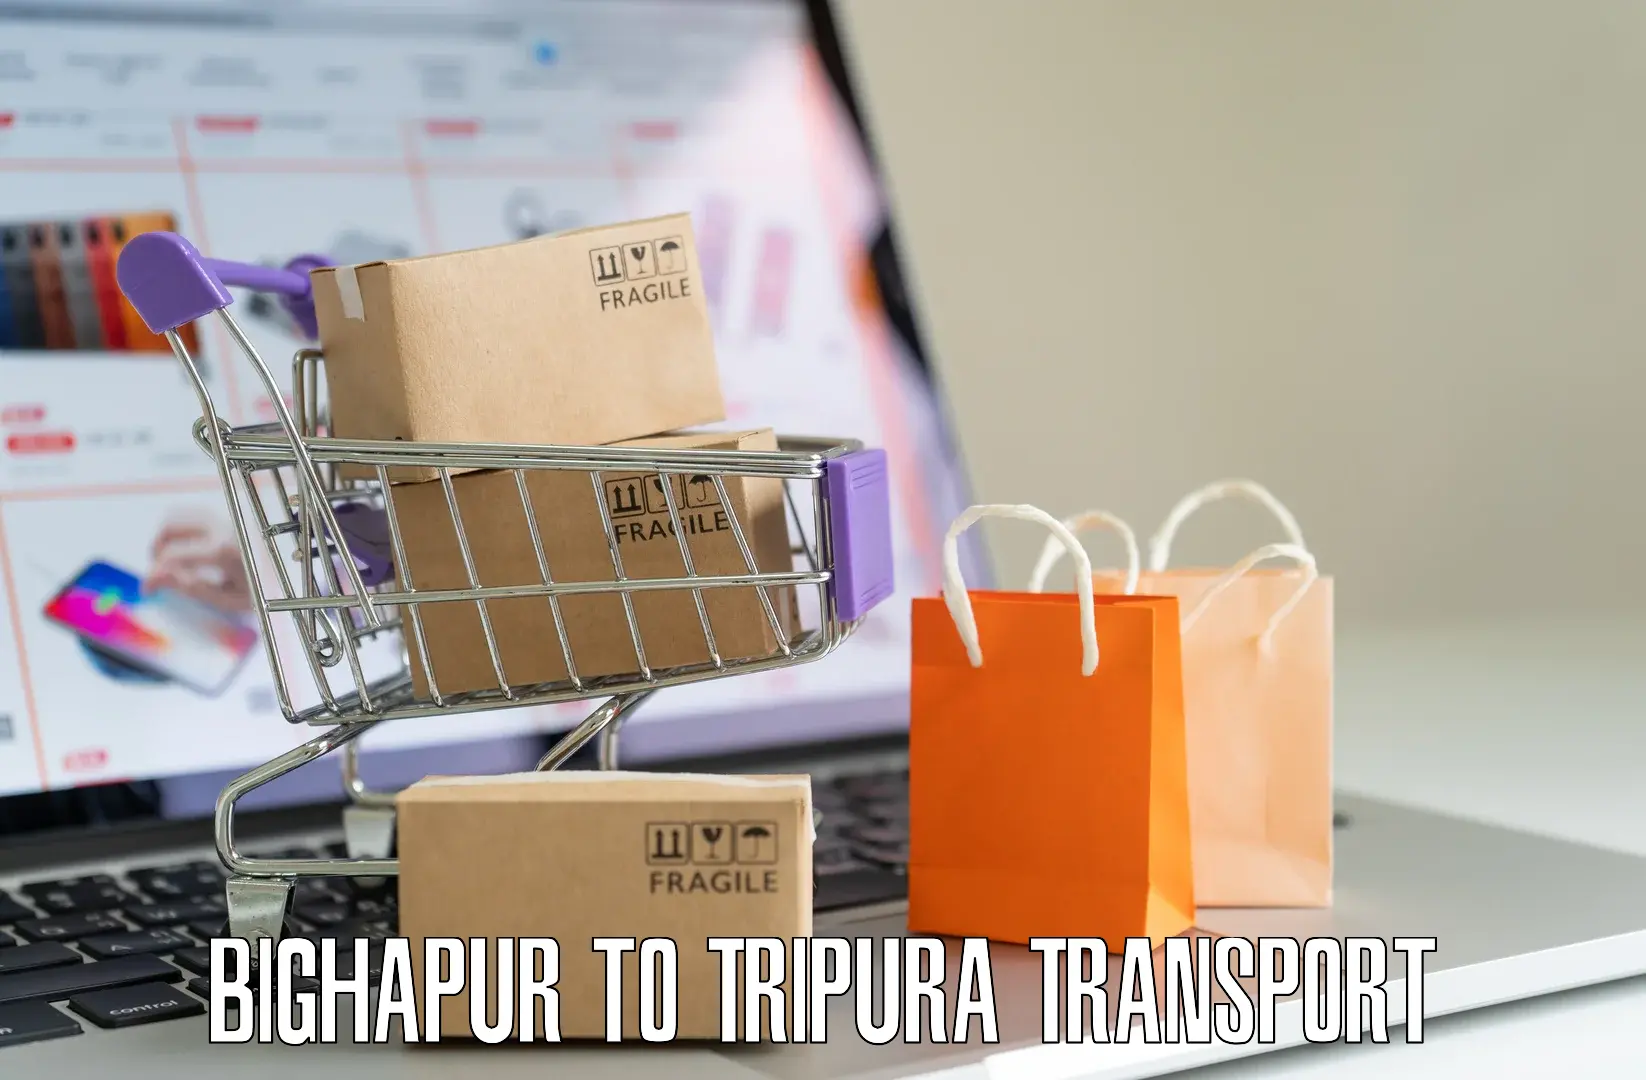 Daily transport service Bighapur to Kamalpur